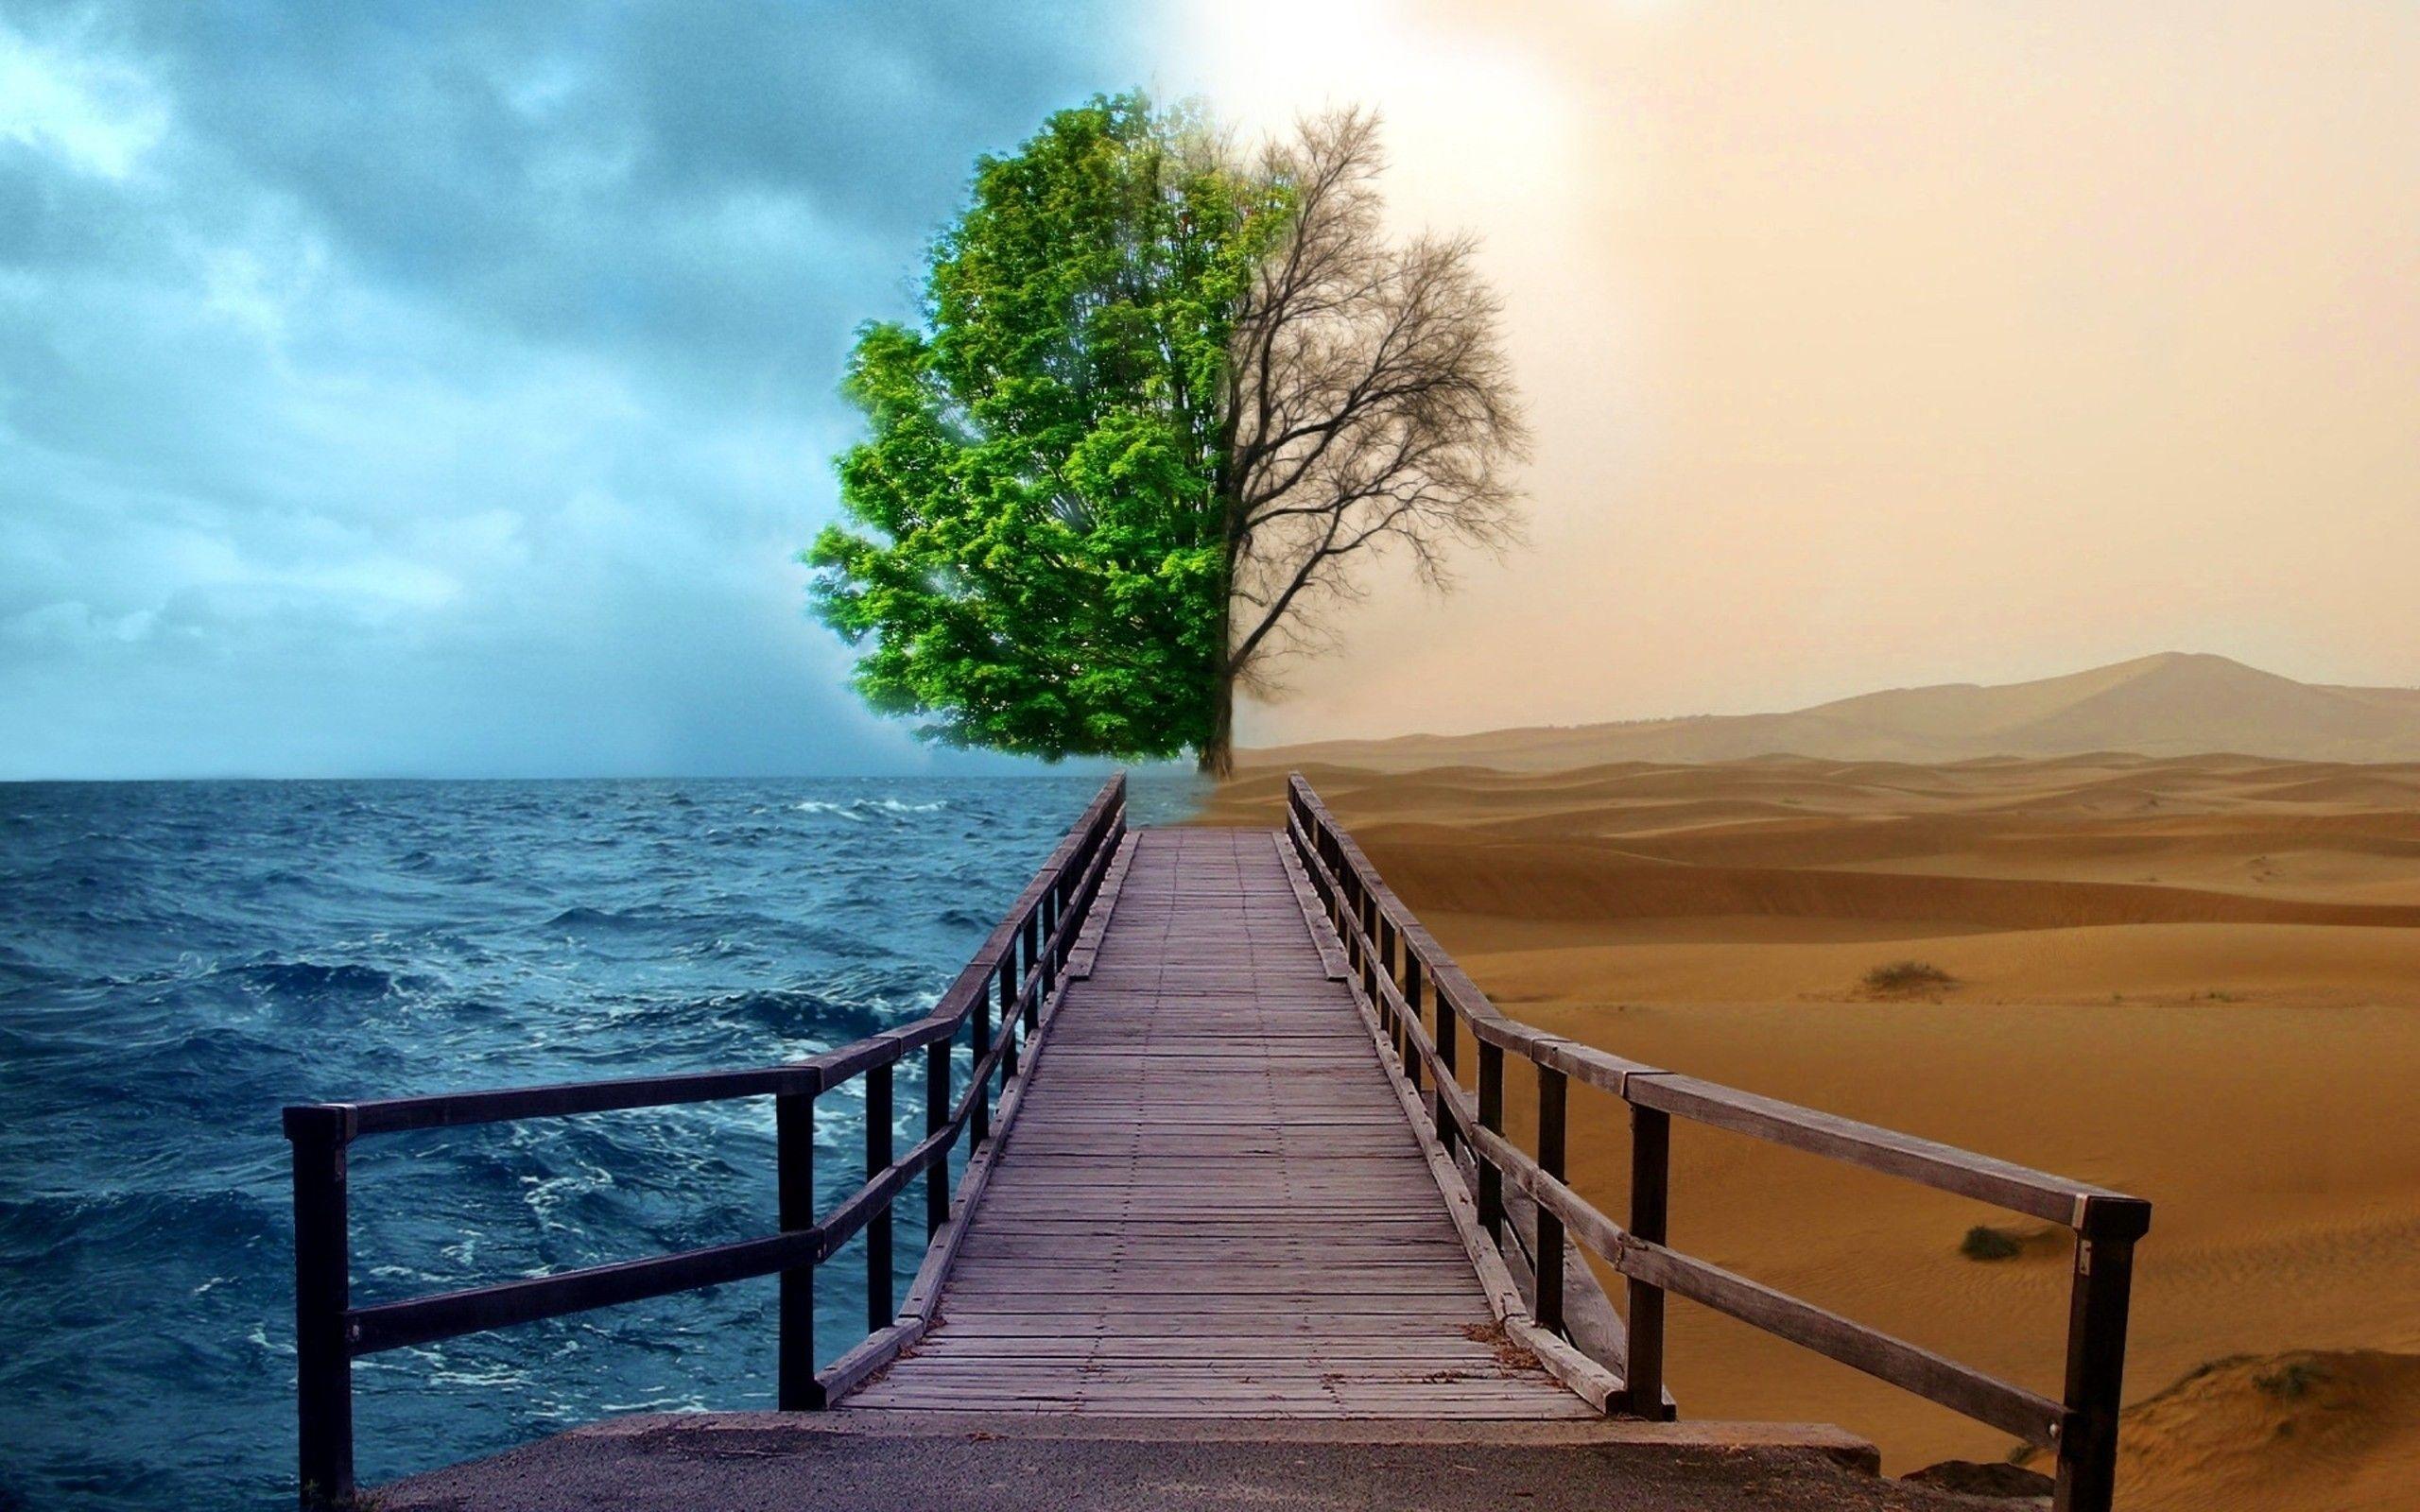 Ocean trees desert contrast